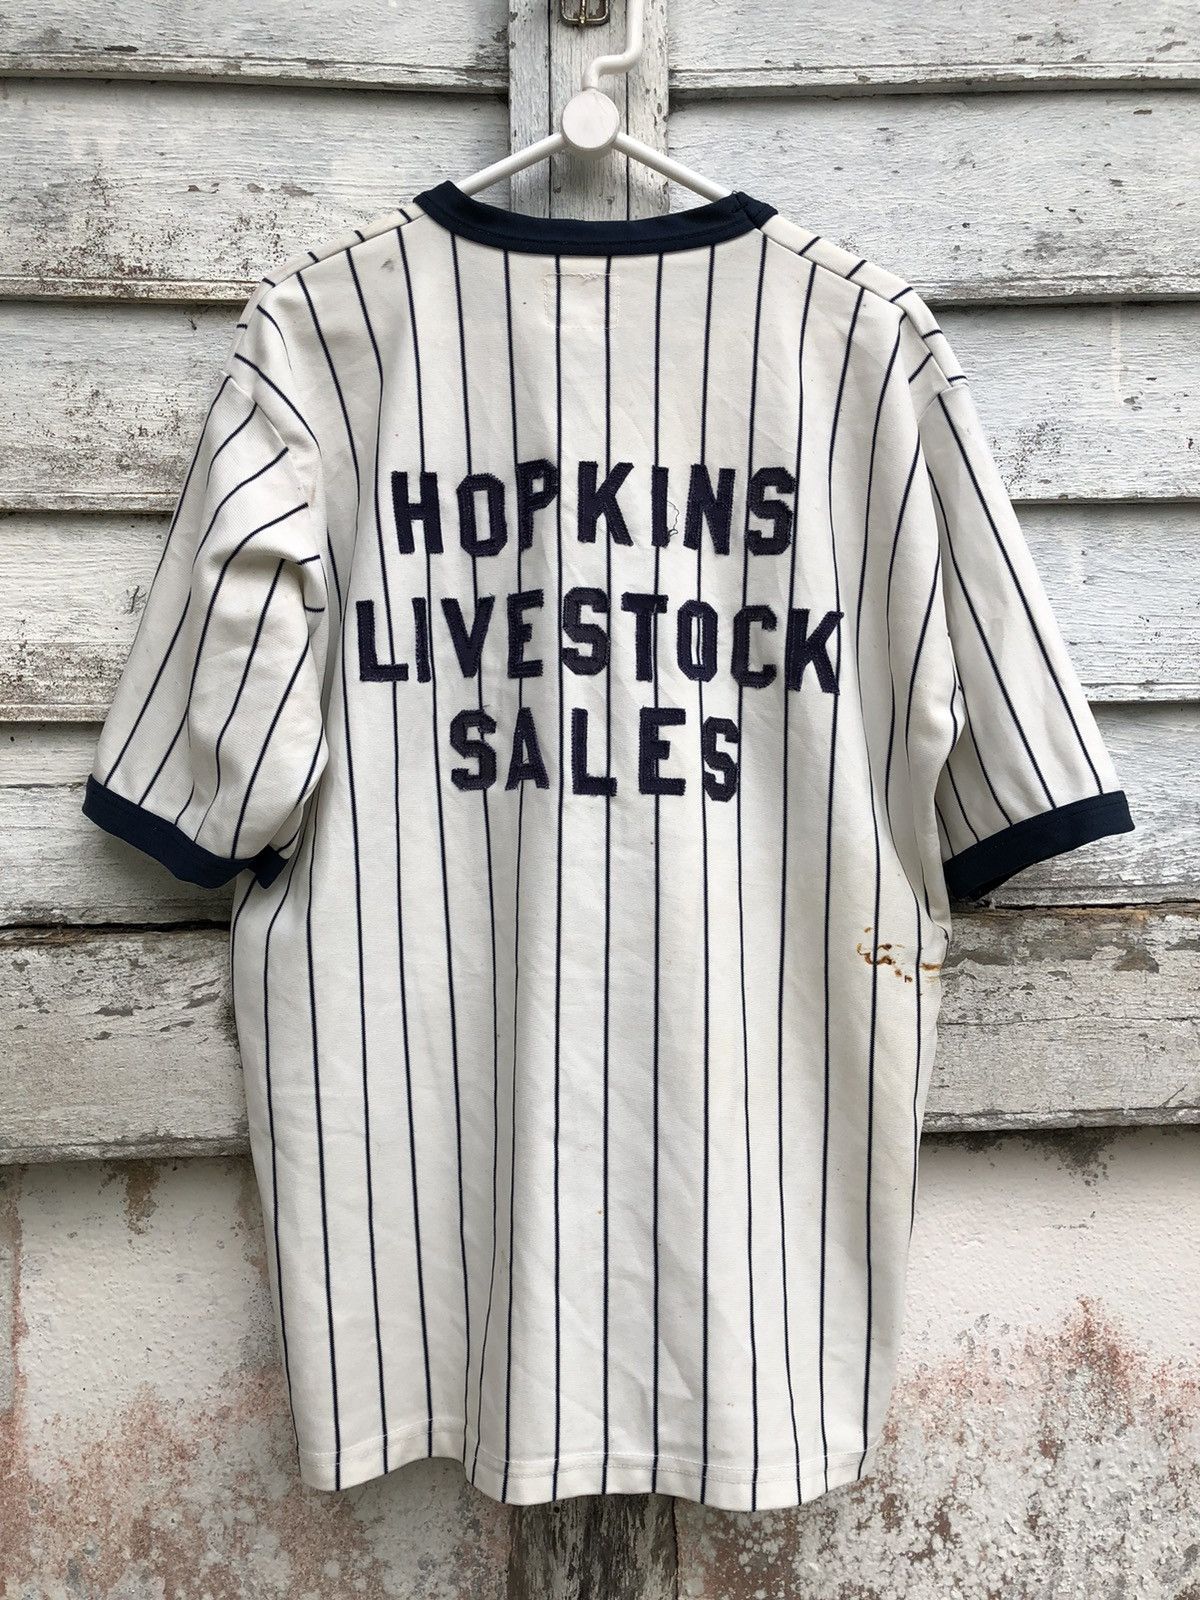 Vintage 70s-80s Pride Uniform Hopkins Livestock Sales - 2